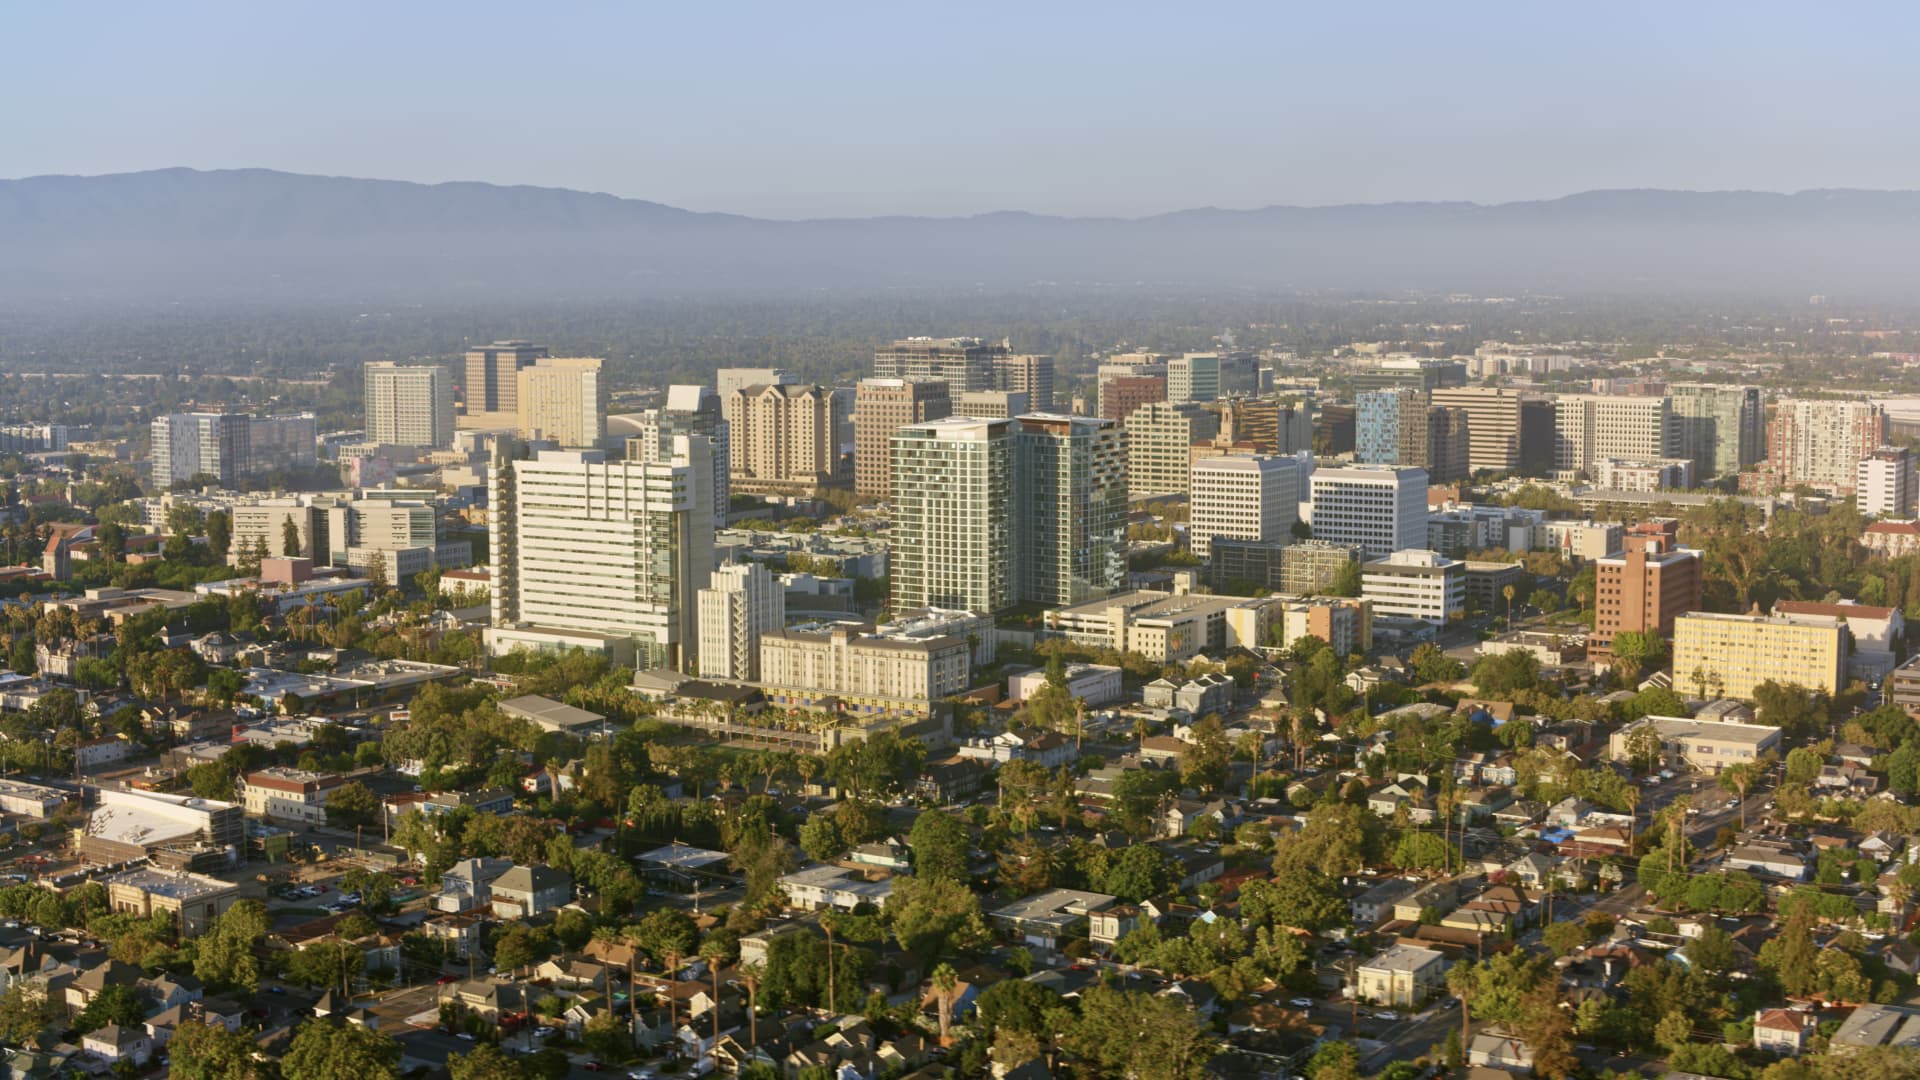 San Jose-Sunnyvale-Santa Clara, California ranked as the least affordable metro area for America's middle class.